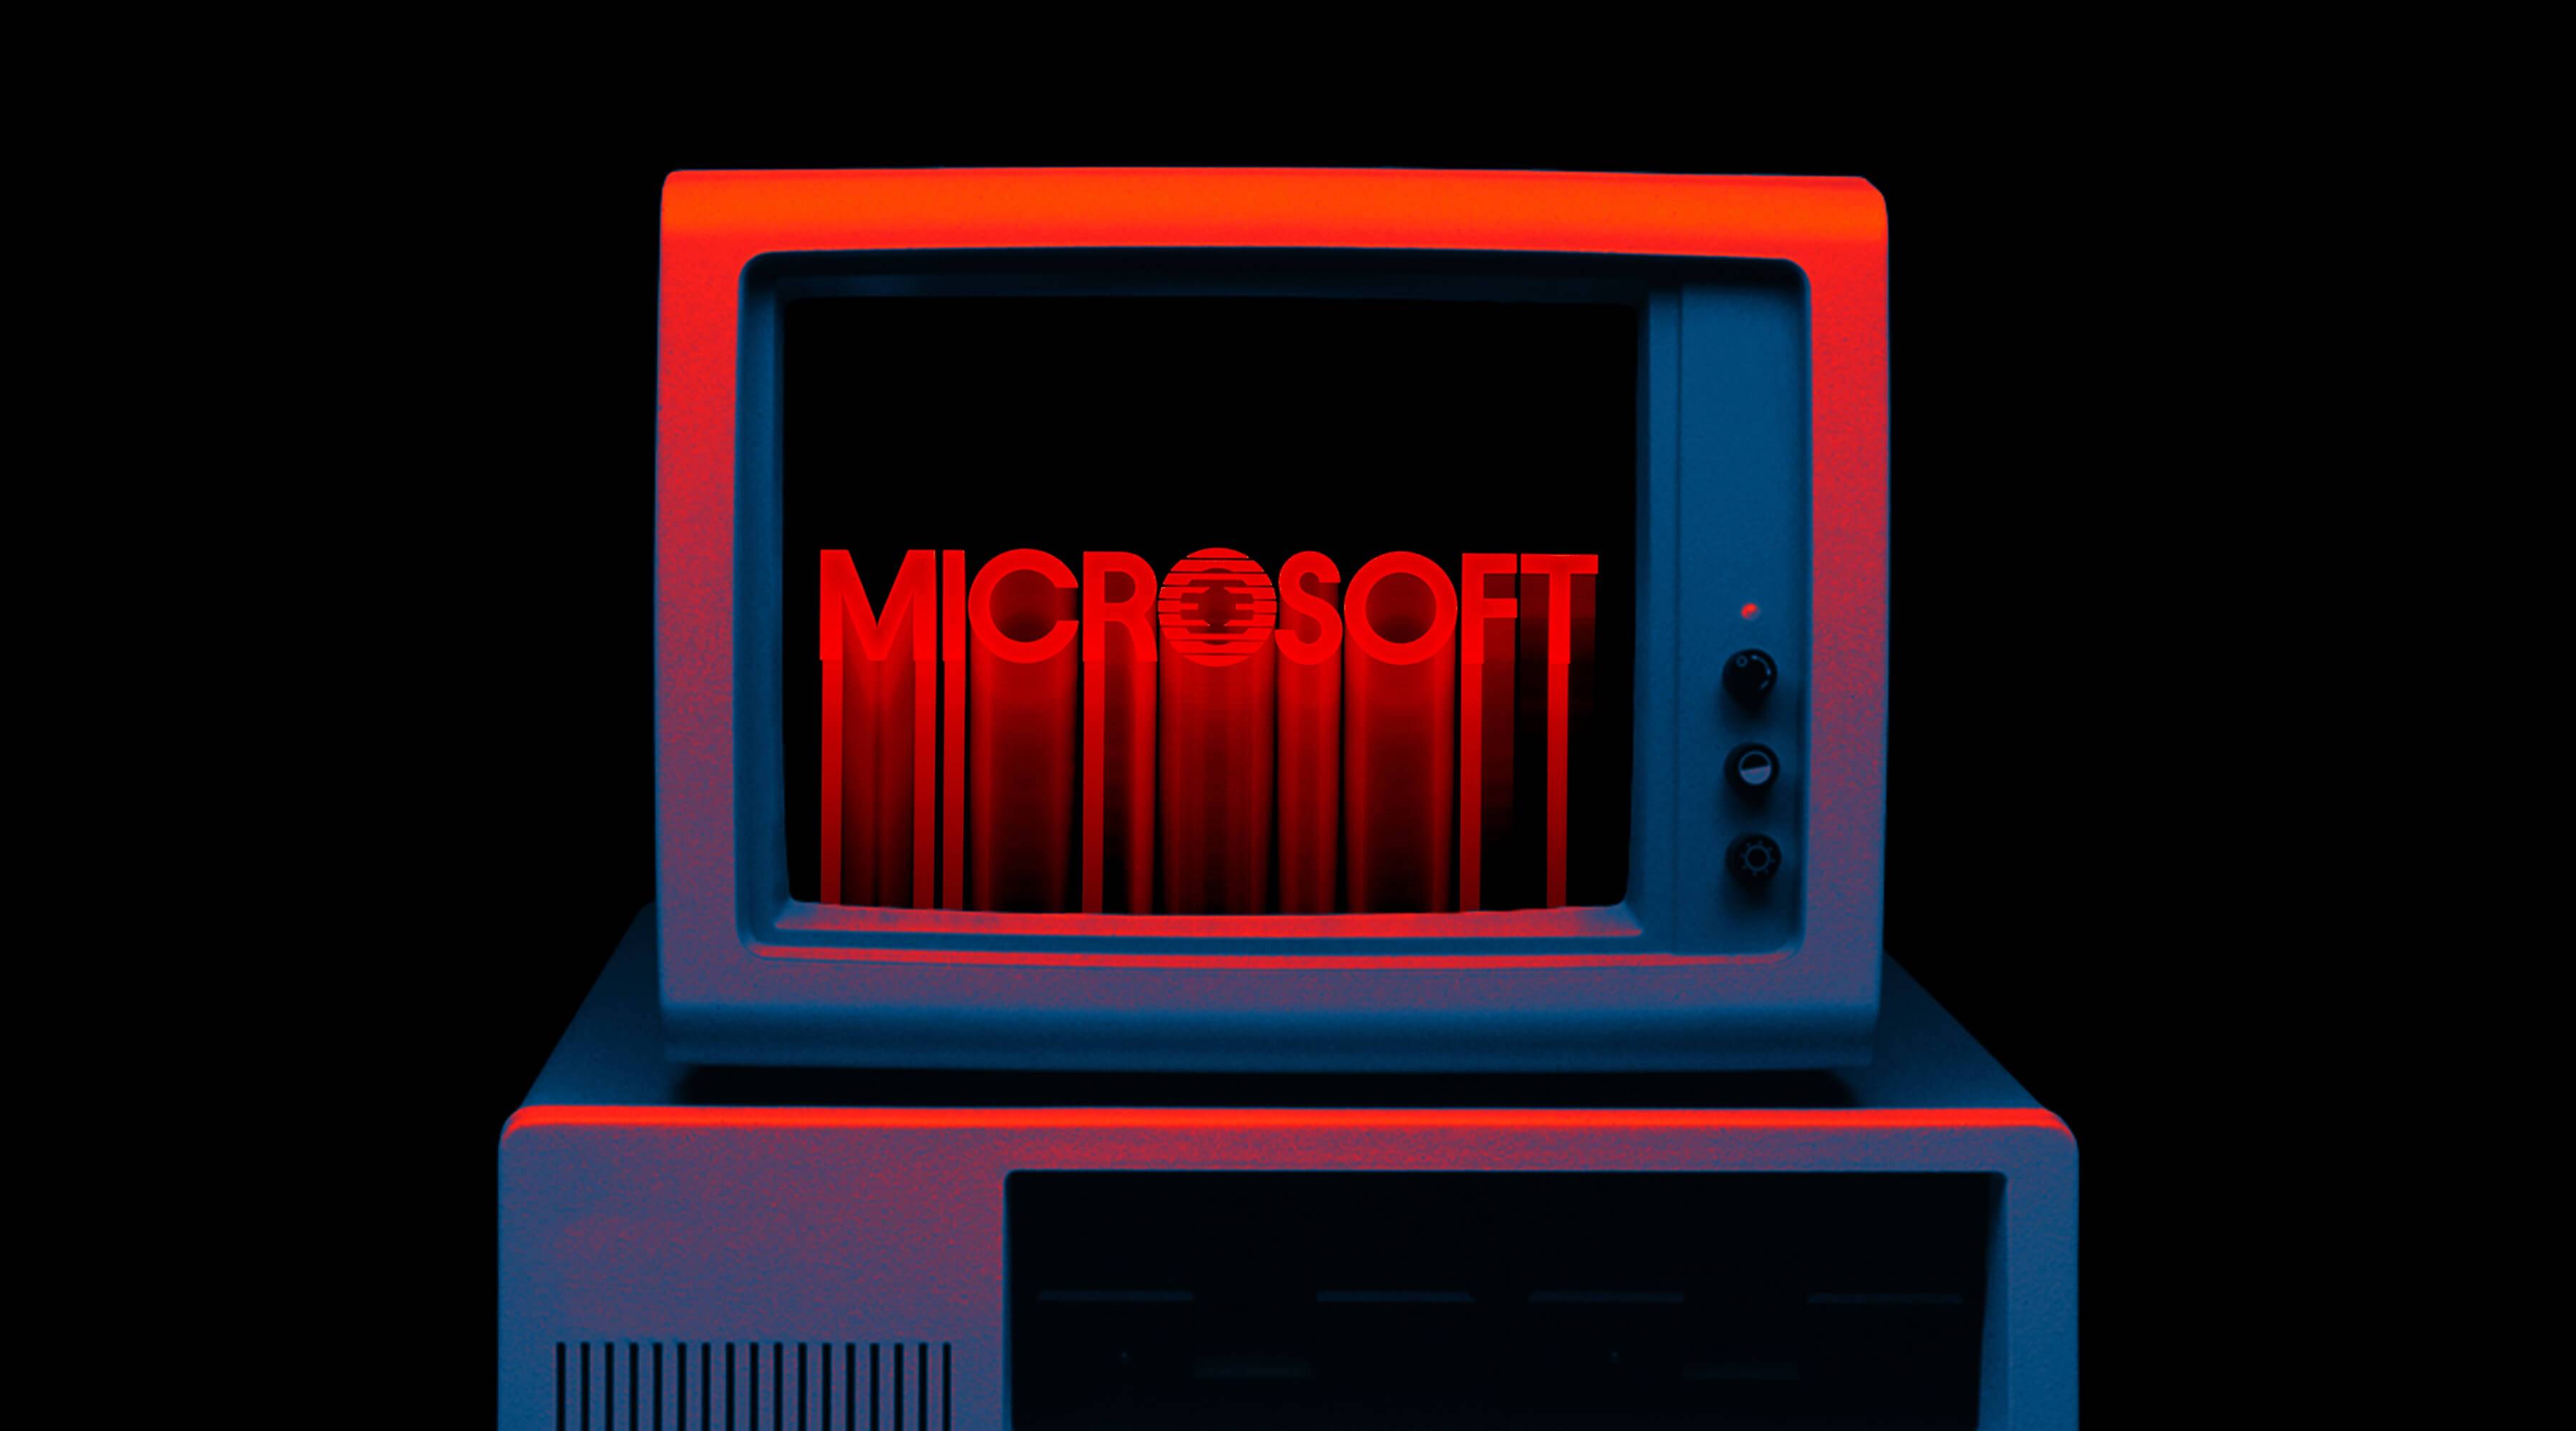 Microsoft-red.jpg